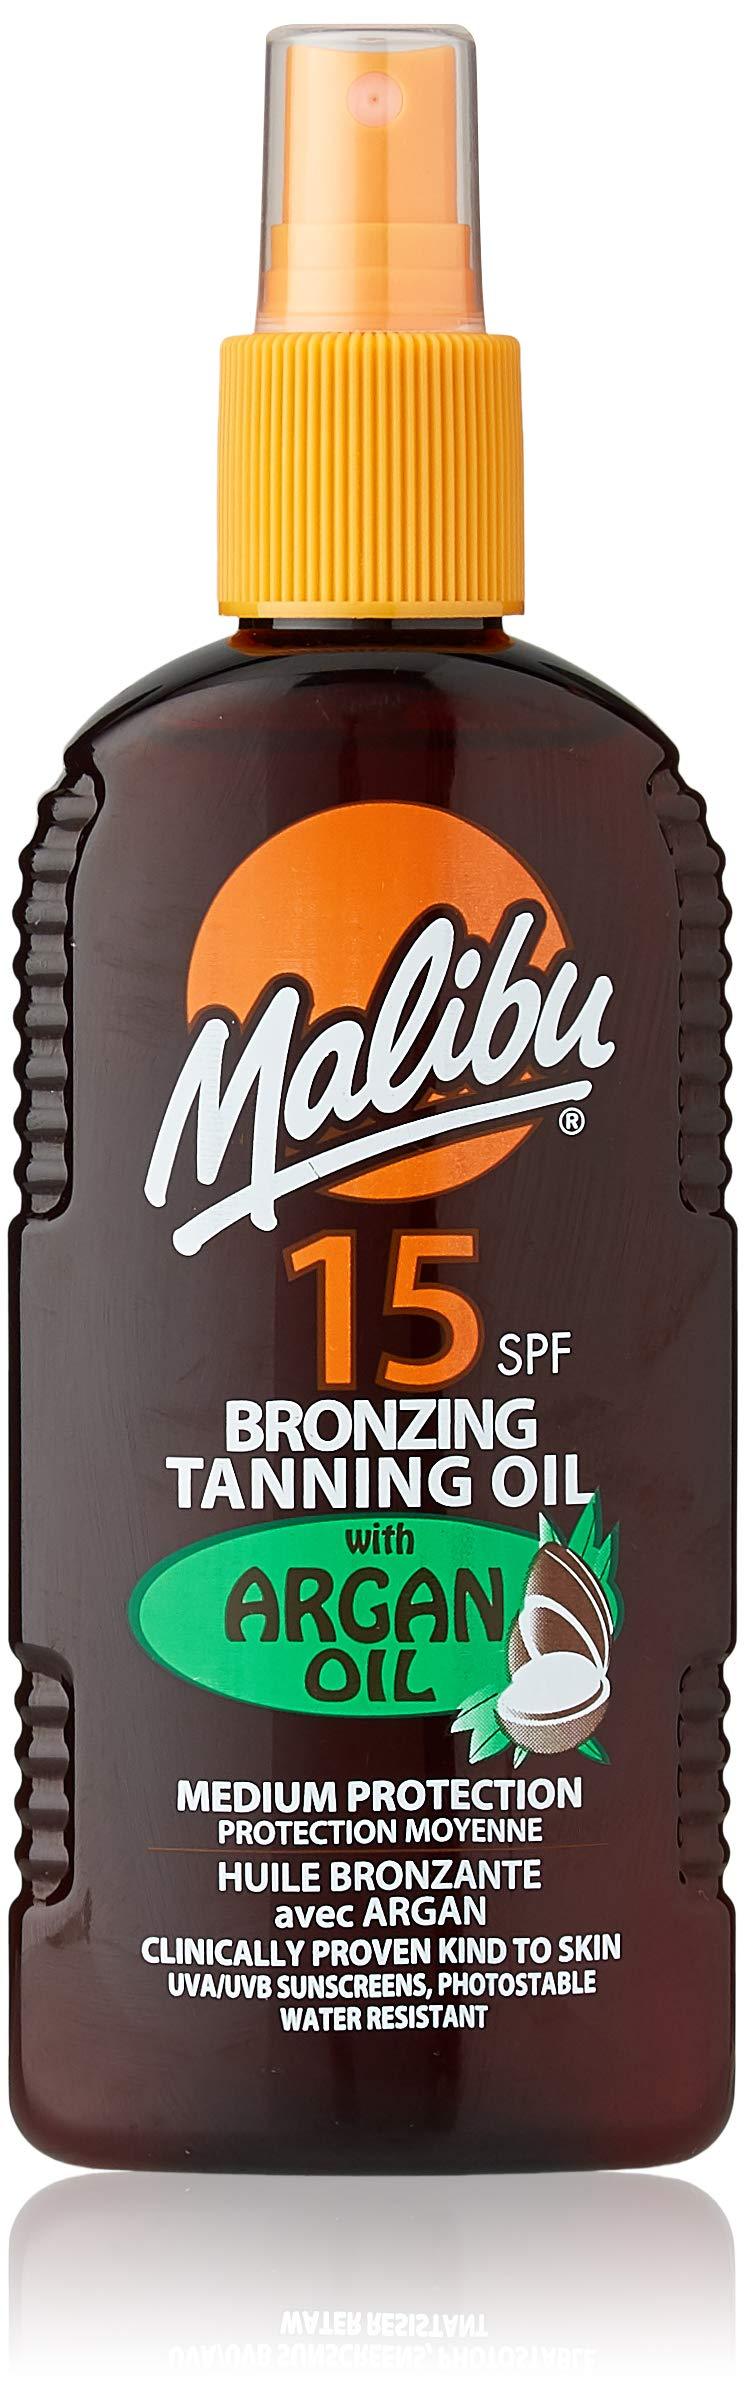 Malibu Medium Sun Protection Water Resistant Bronzing Tanning Oil Spray SPF 15 with Argan Oil, 200ml - NewNest Australia